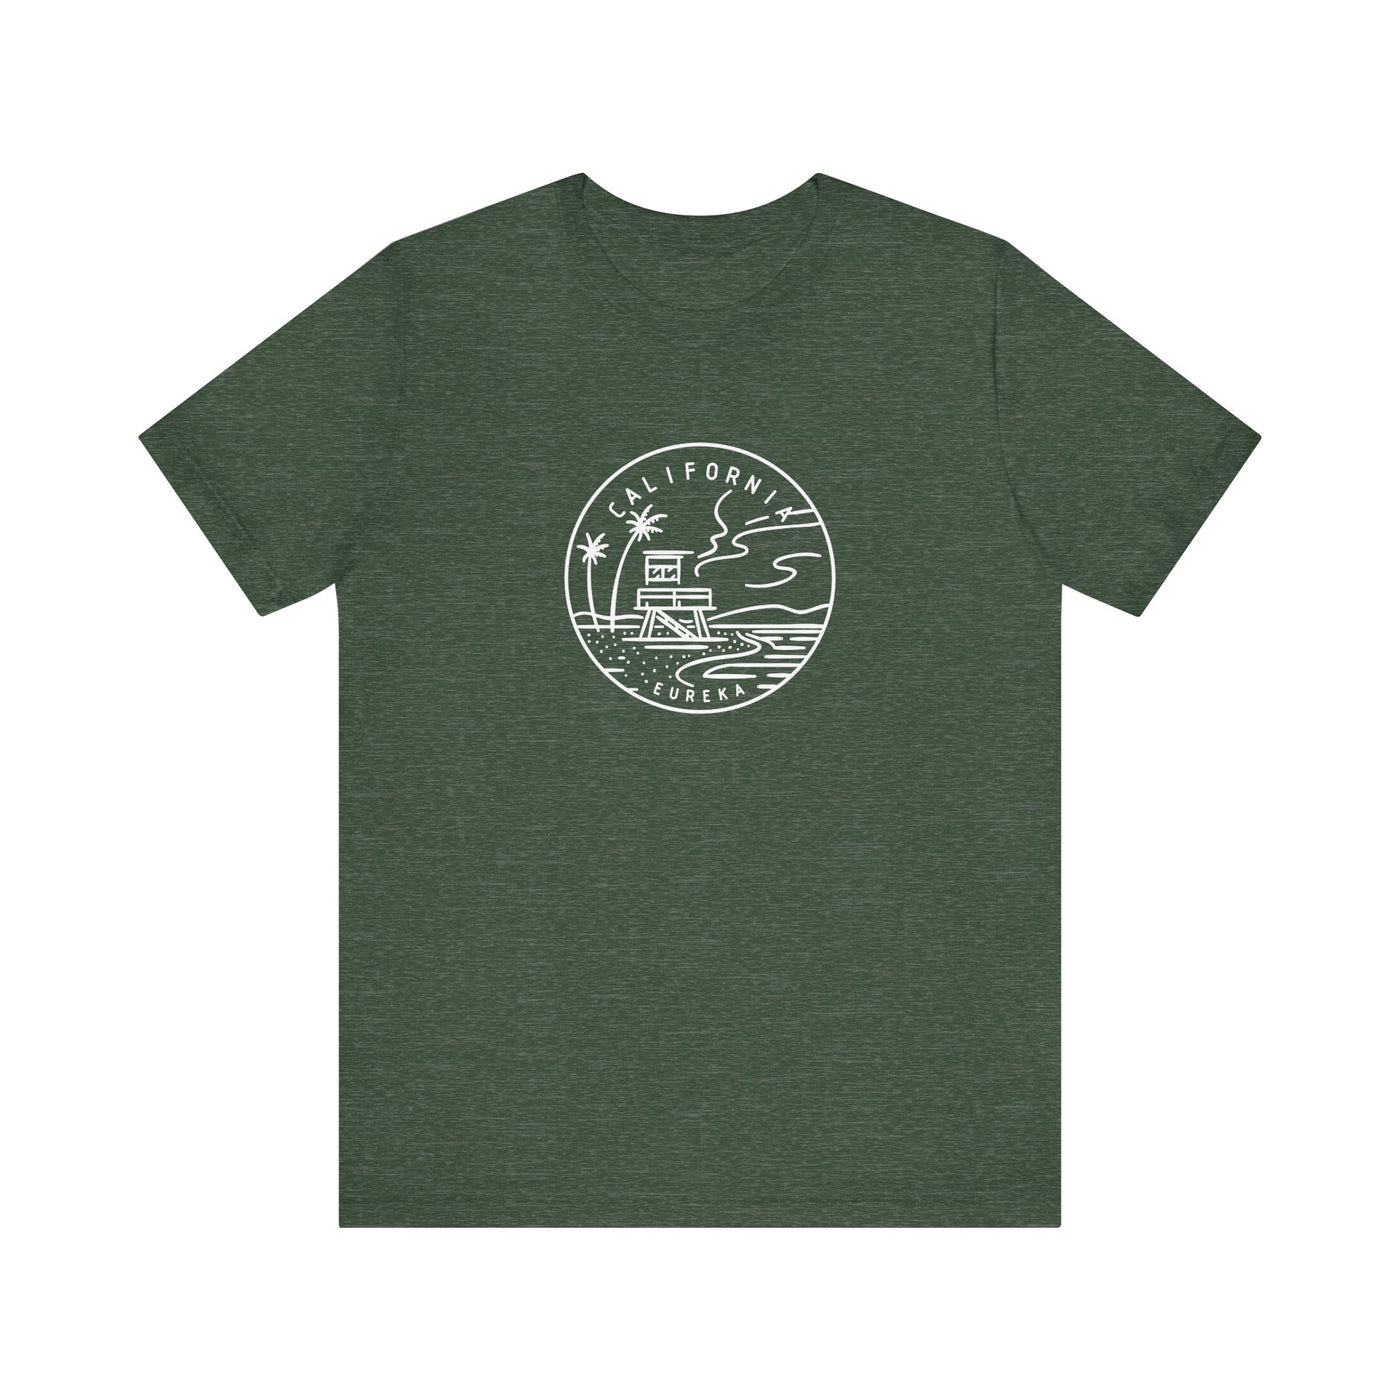 California State Motto Unisex T-Shirt